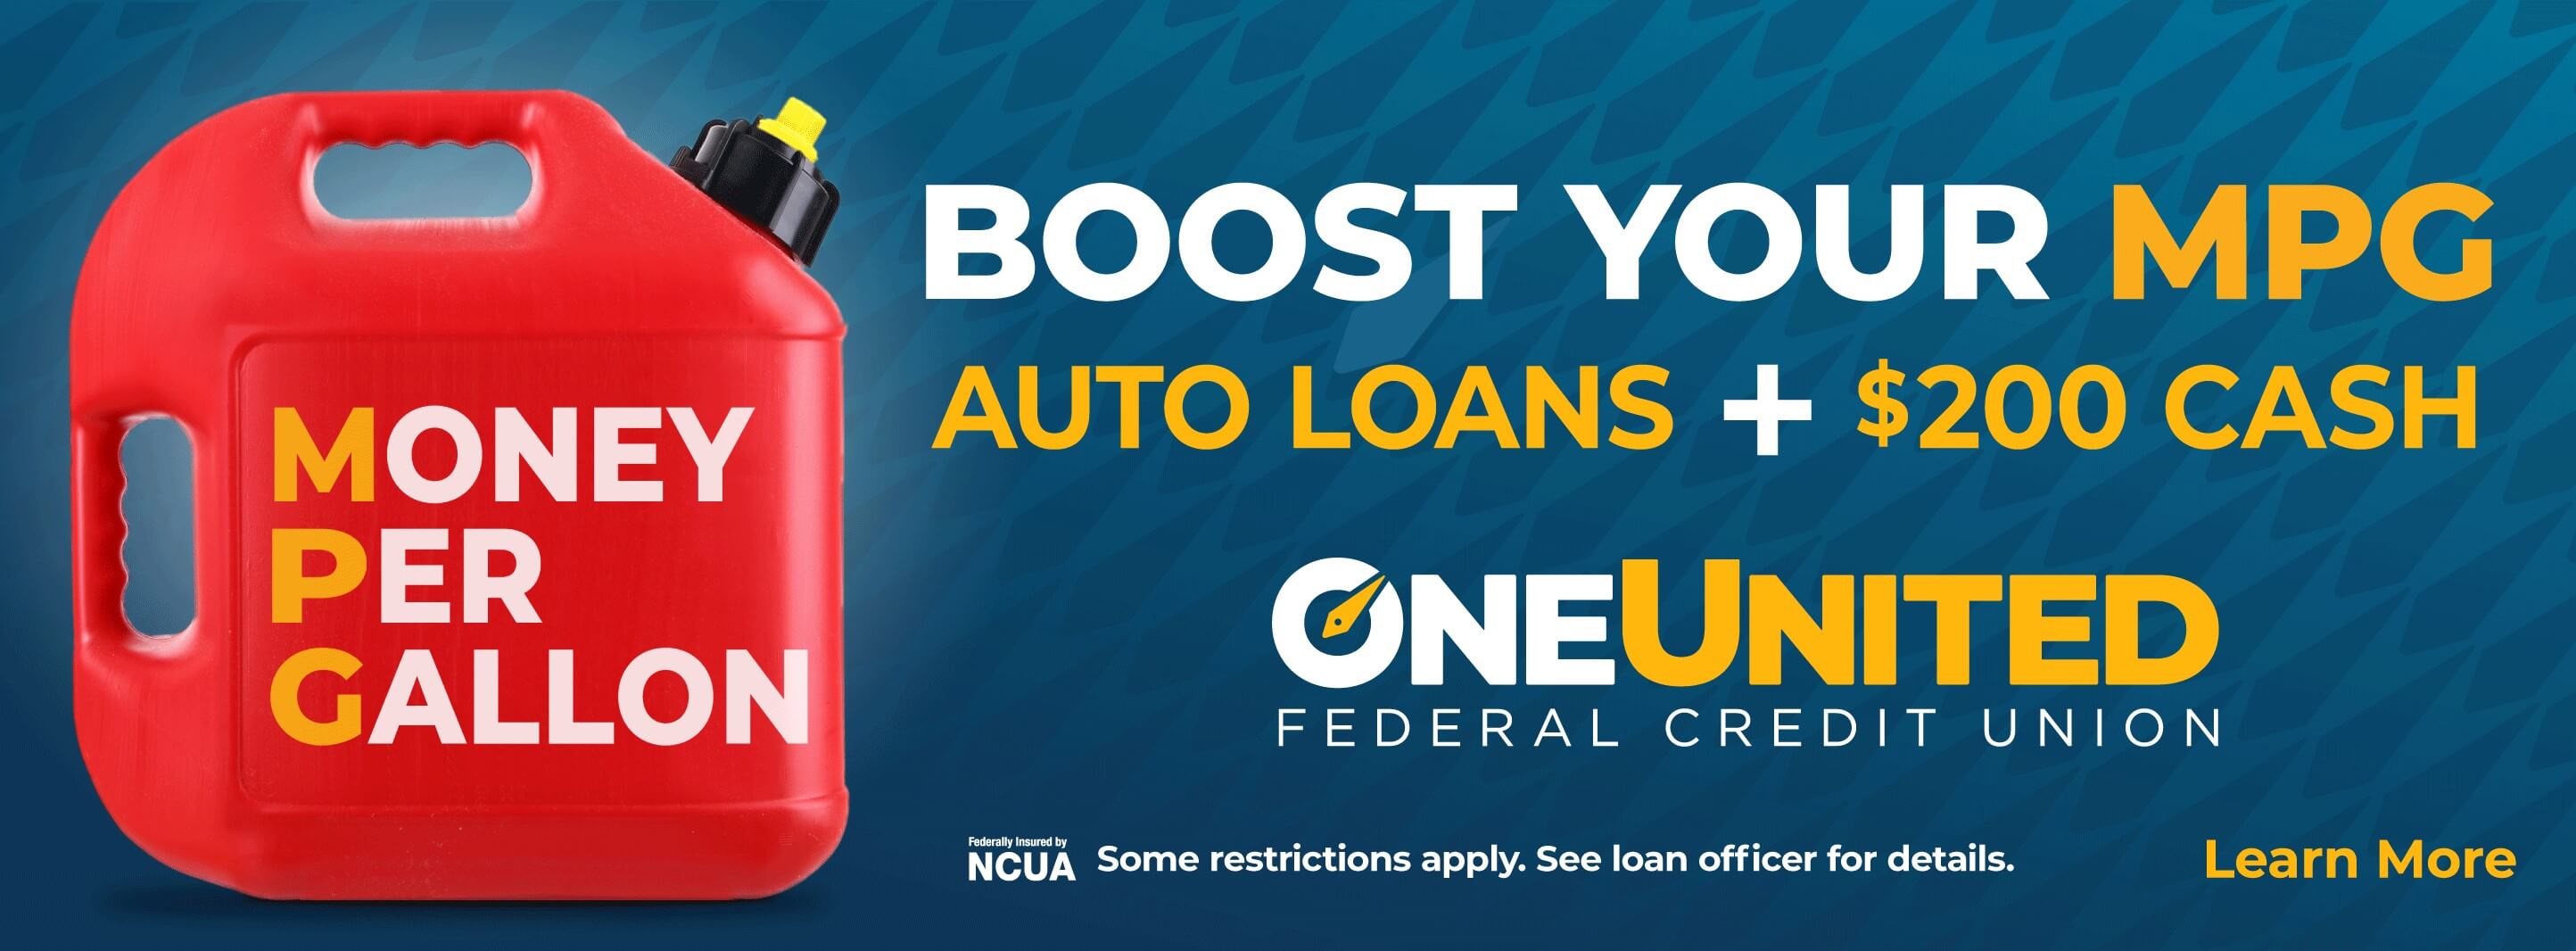 Auto Loan Promotion